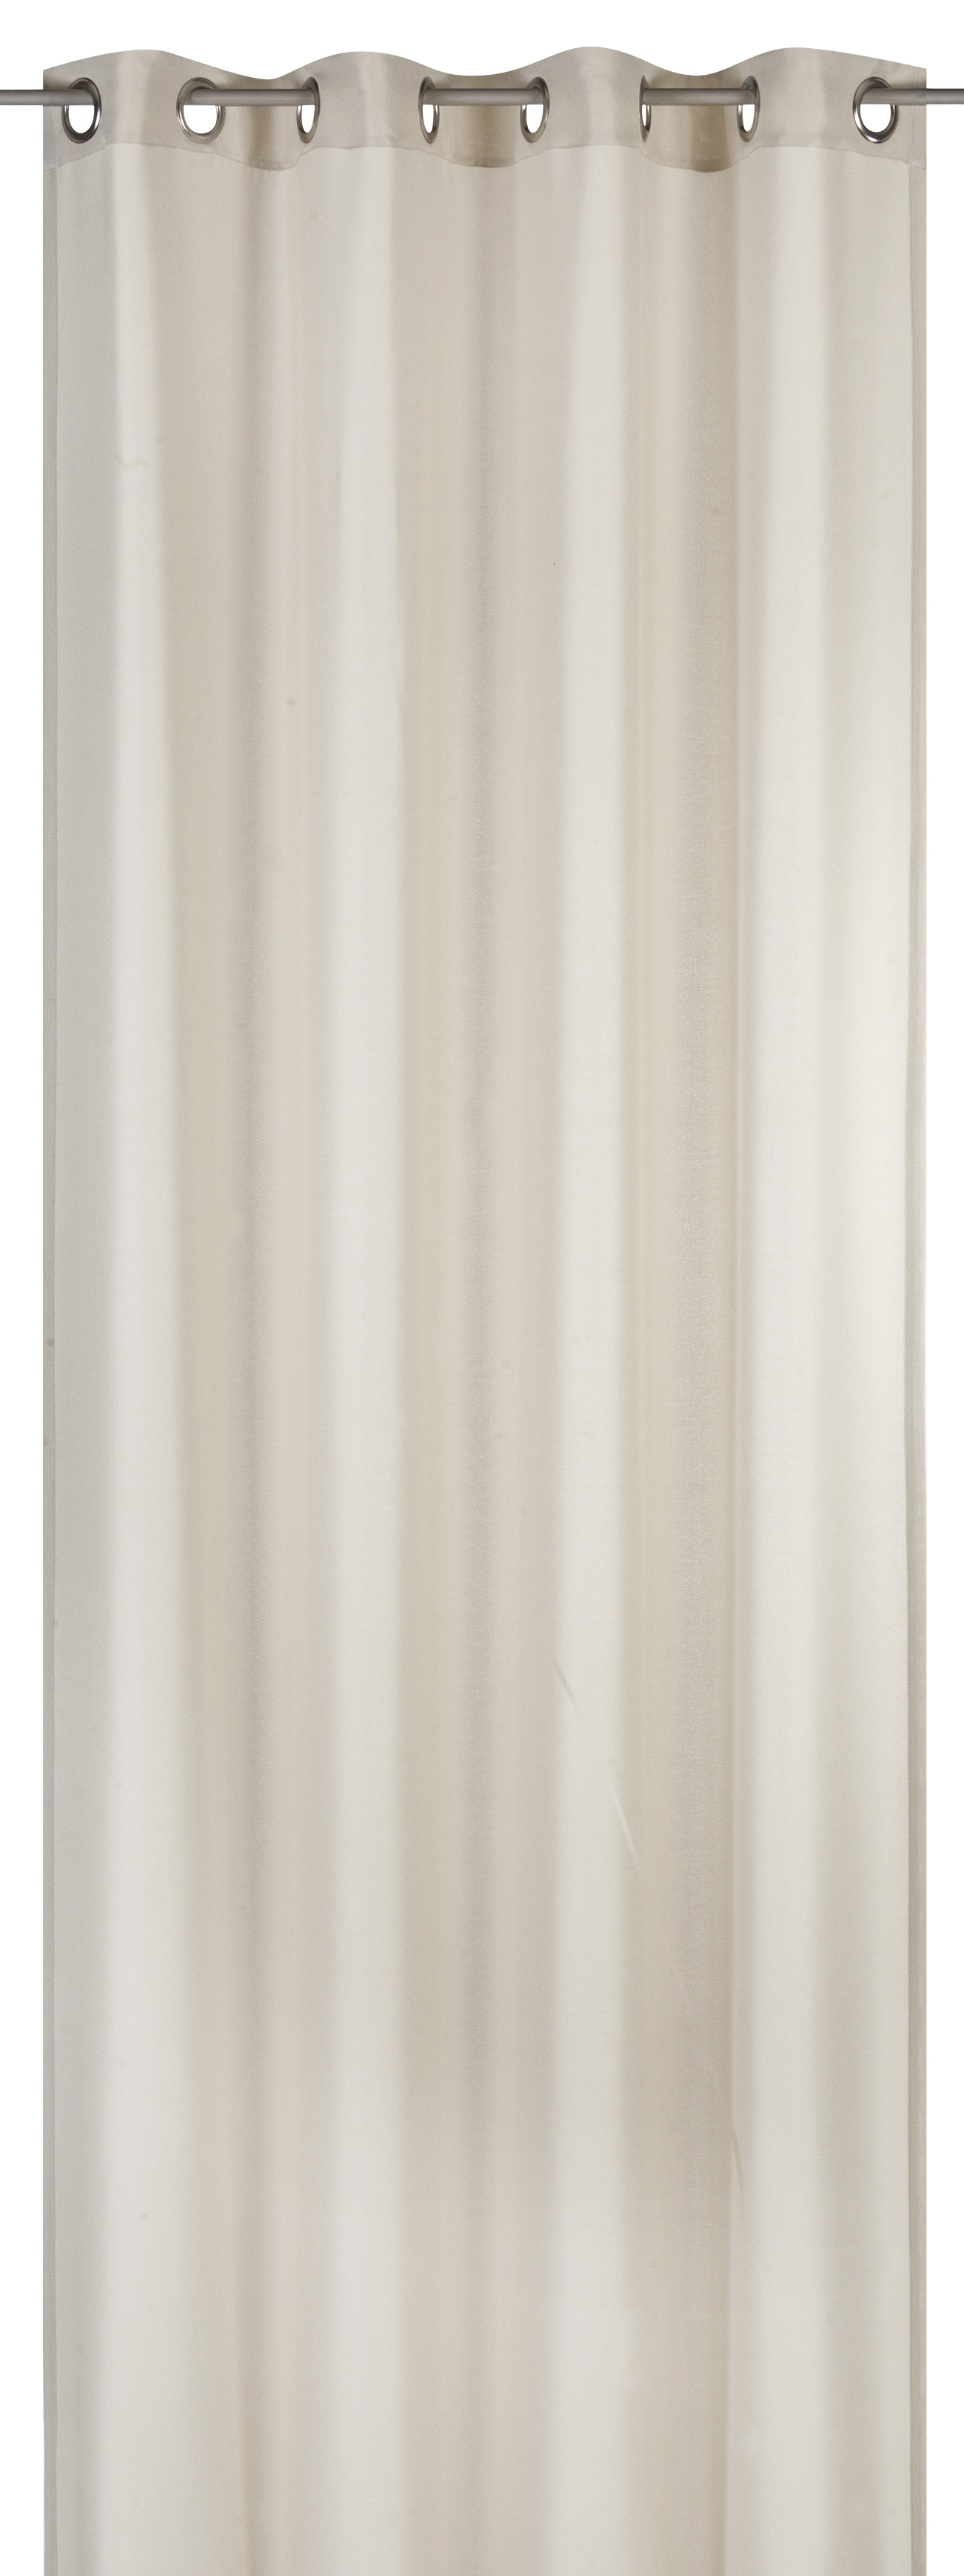 Elbersdrucke Lino 09 Fertigvorhang beige, 140 x 255 cm